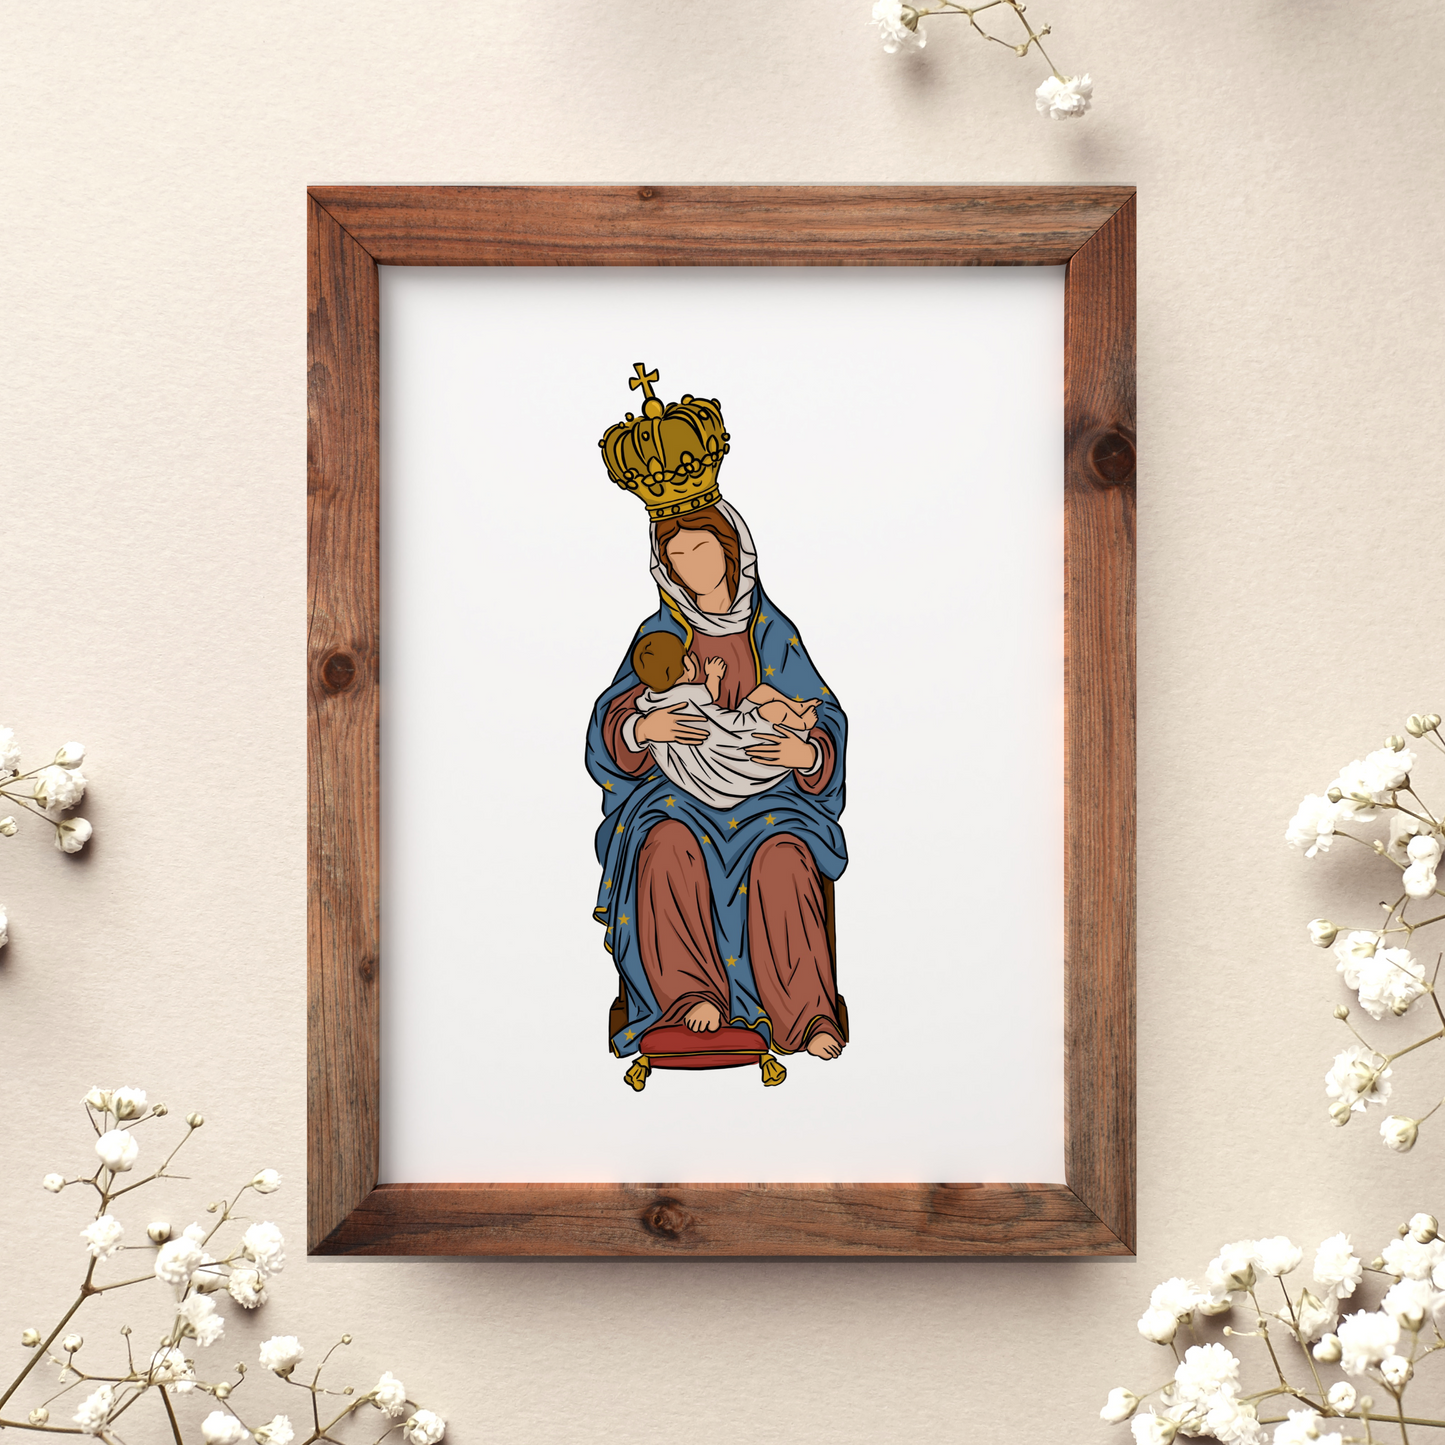 Our Lady of La Leche - 5"x7" Print